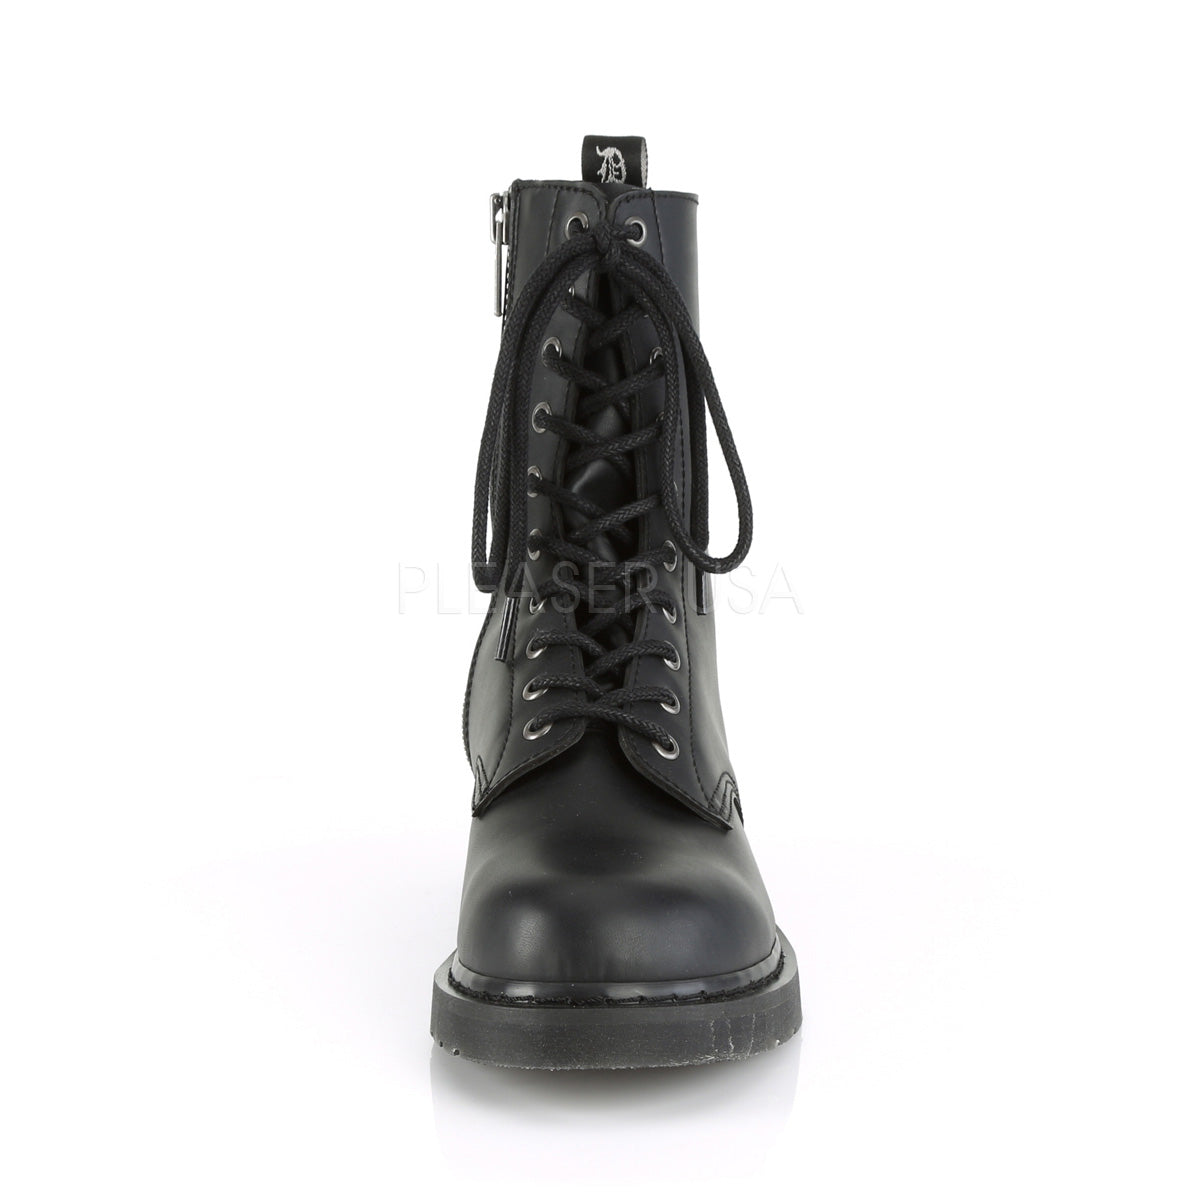 1 Inch Heel BOLT-200 Black Vegan Leather